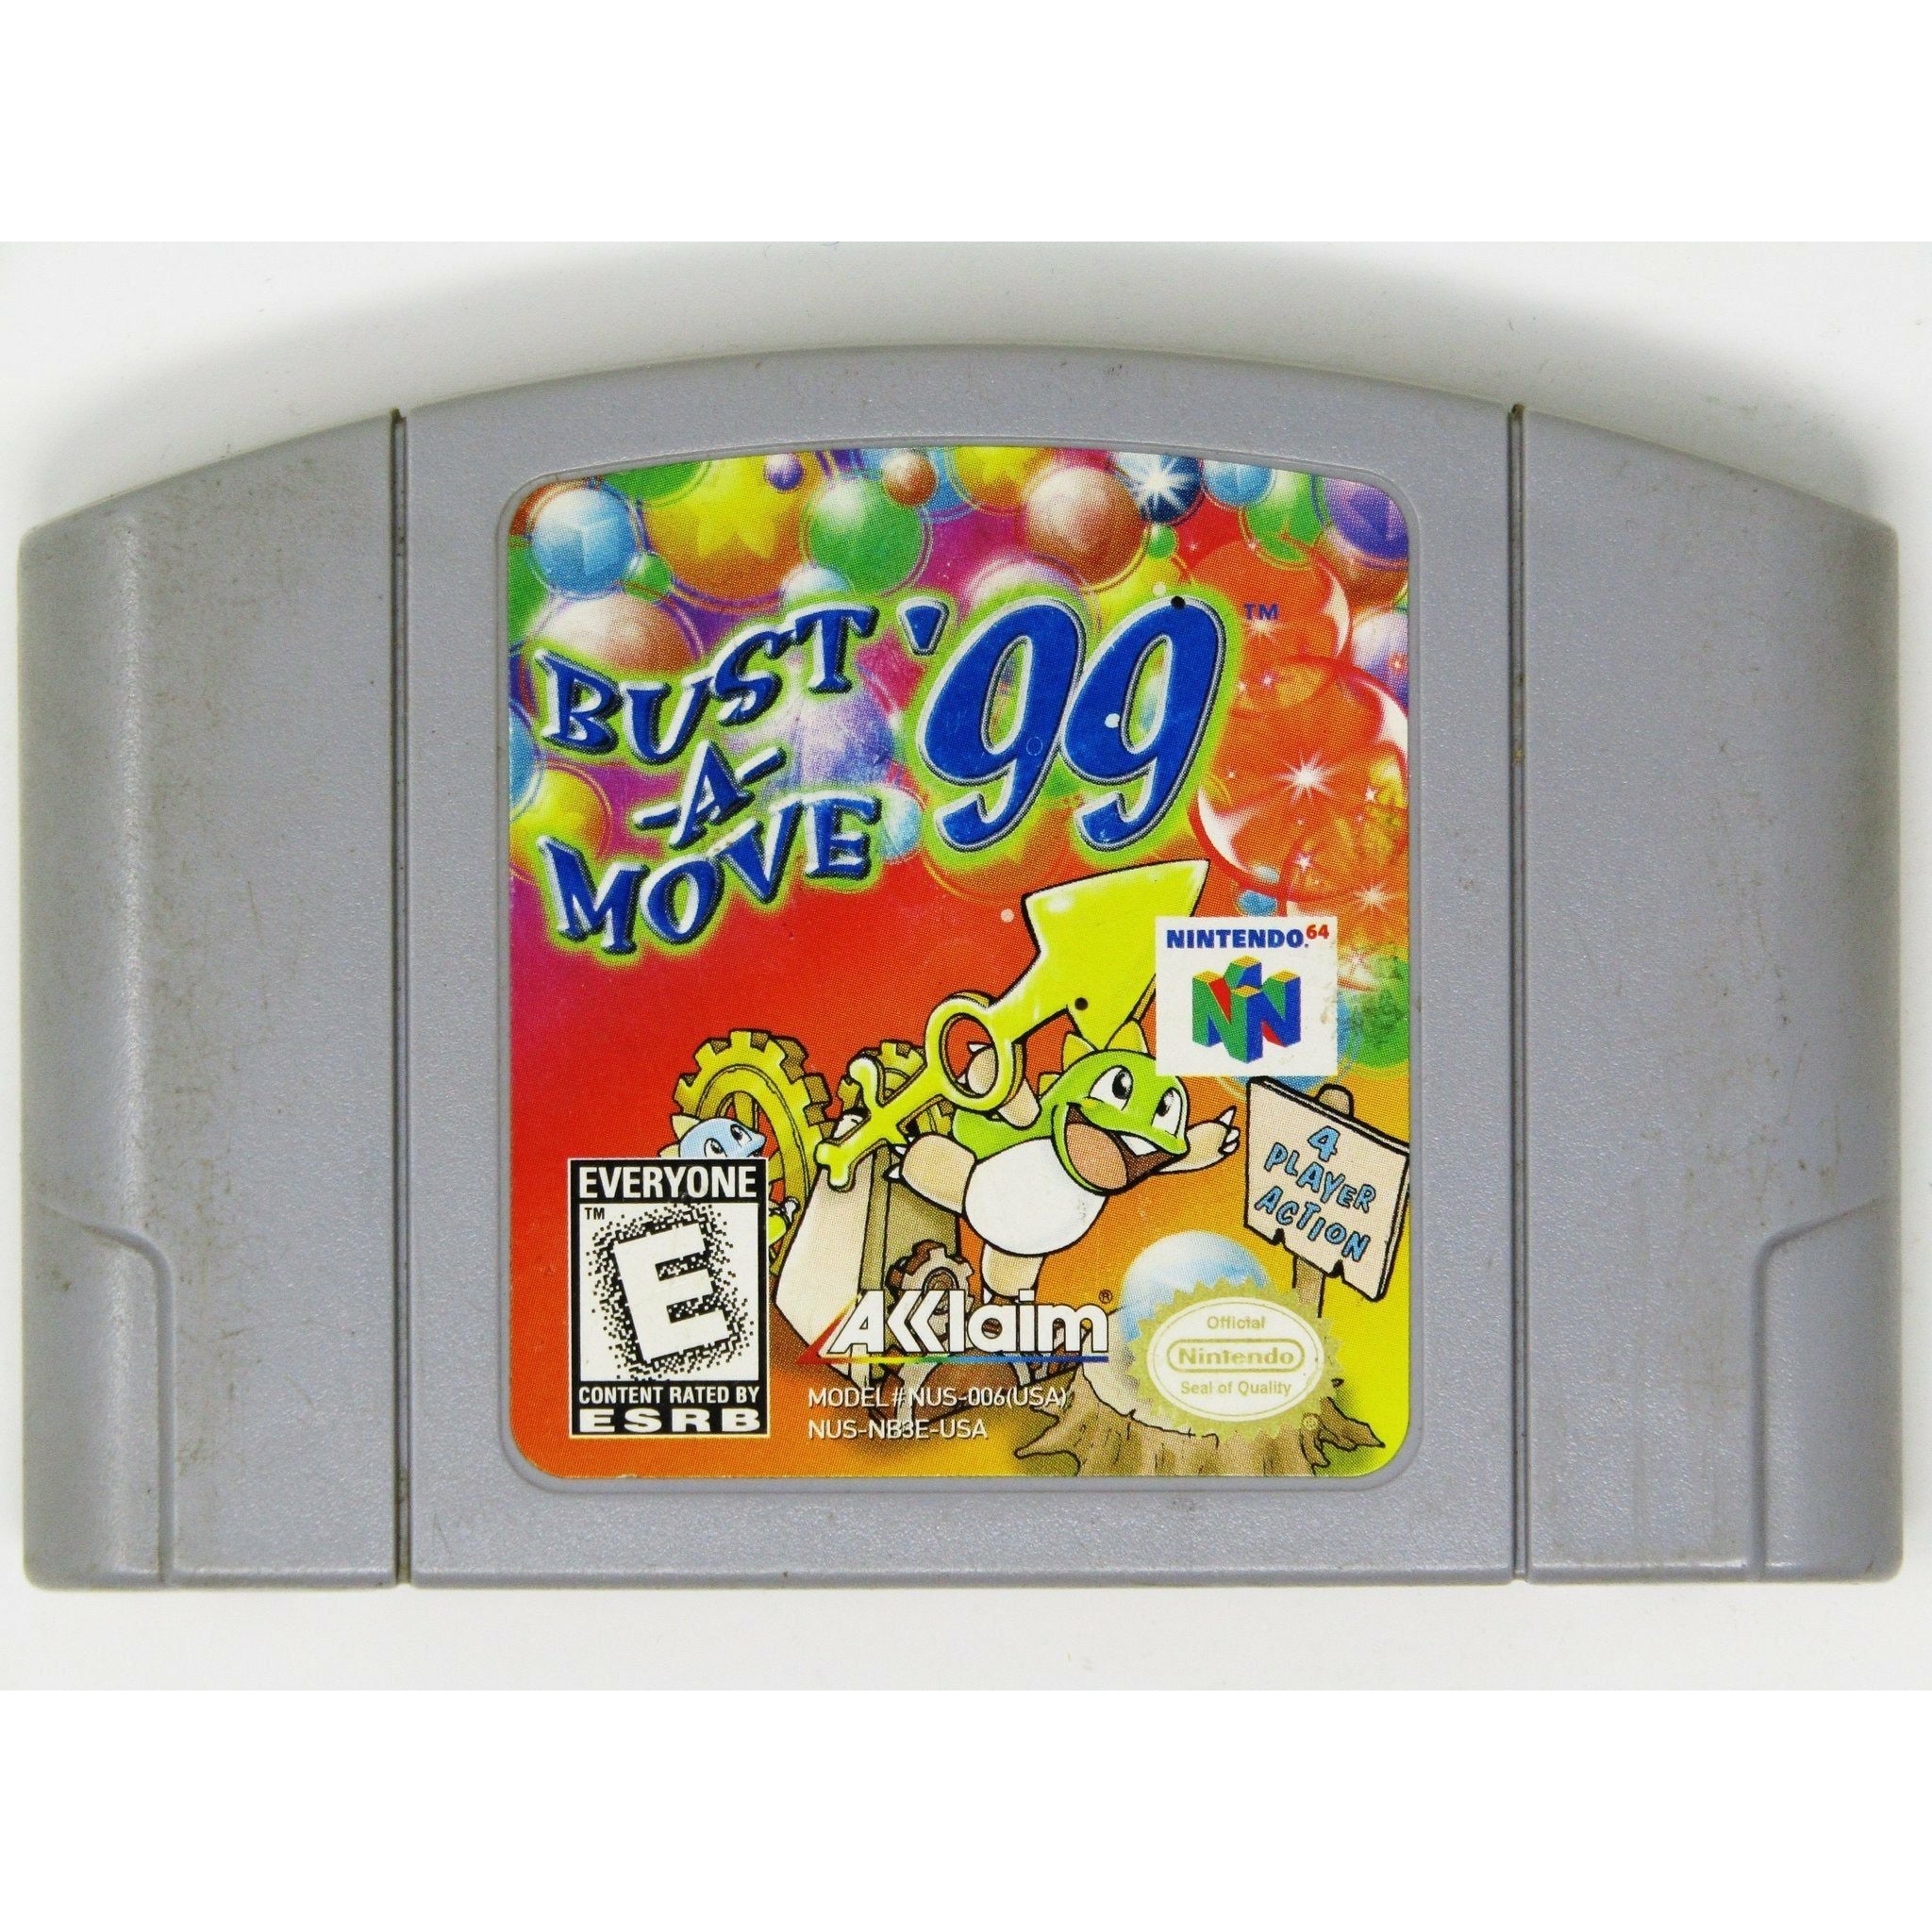 N64 - Bust-A-Move 99